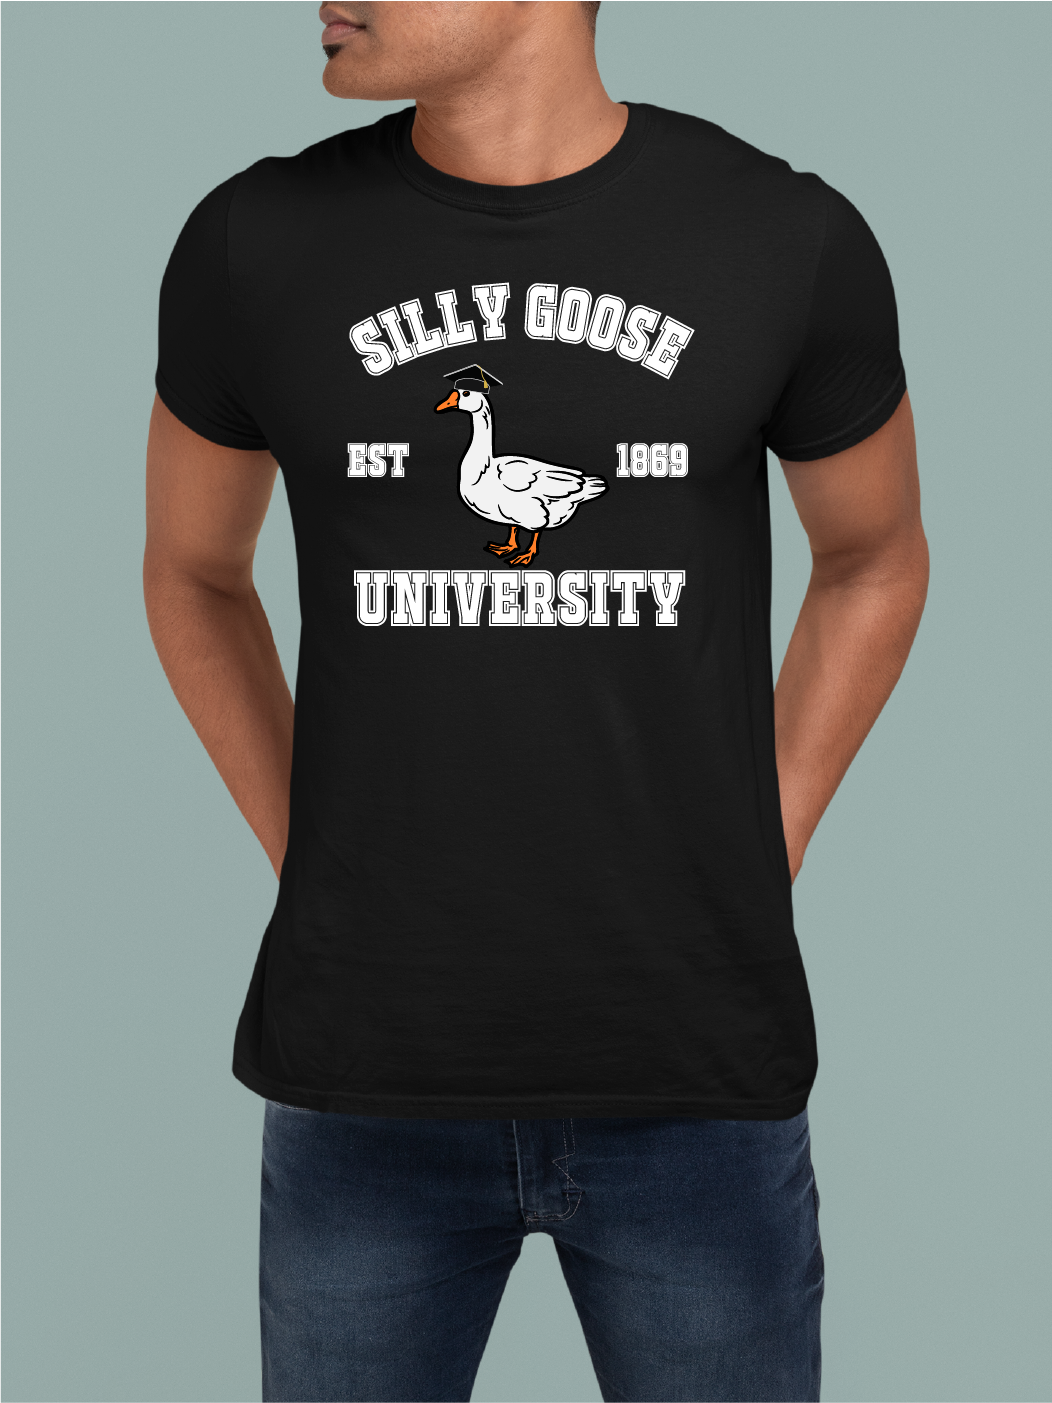 Silly Goose University Shirt